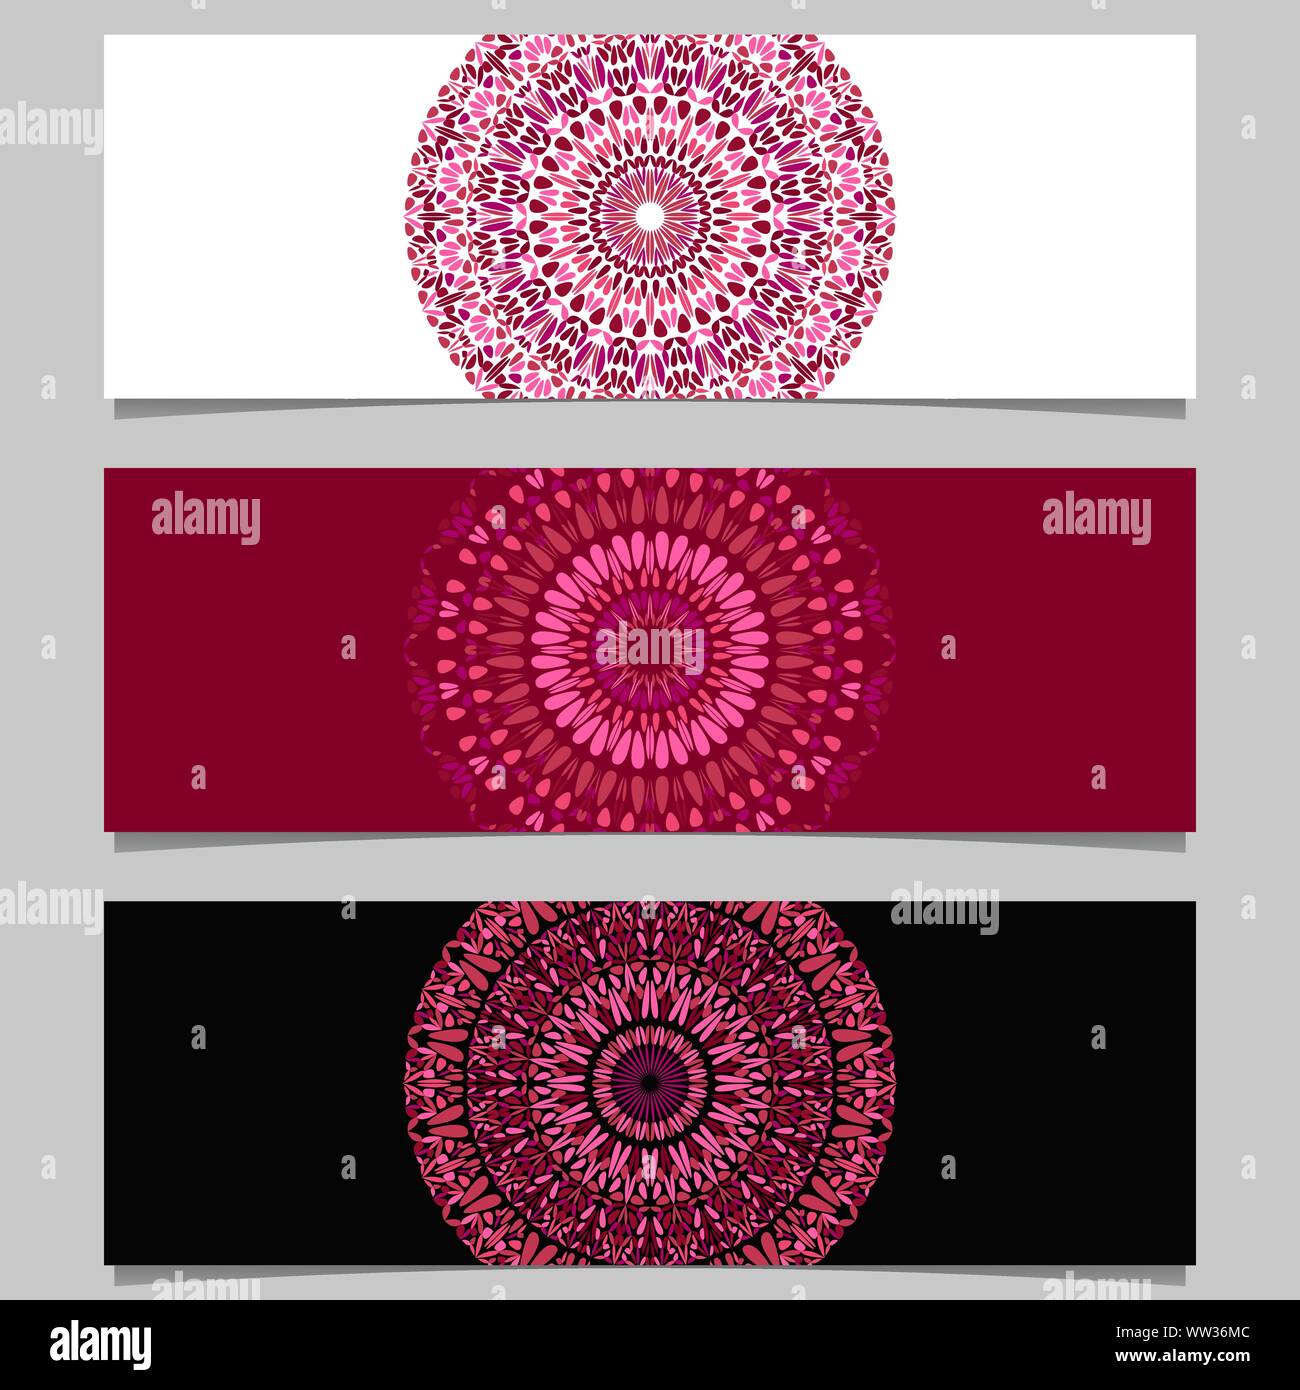 Geometrische horizontale Mandala banner Hintergrund - abstrakte farbenfrohe Vektorgrafik Elemente mit floralen Mandalas Stock Vektor